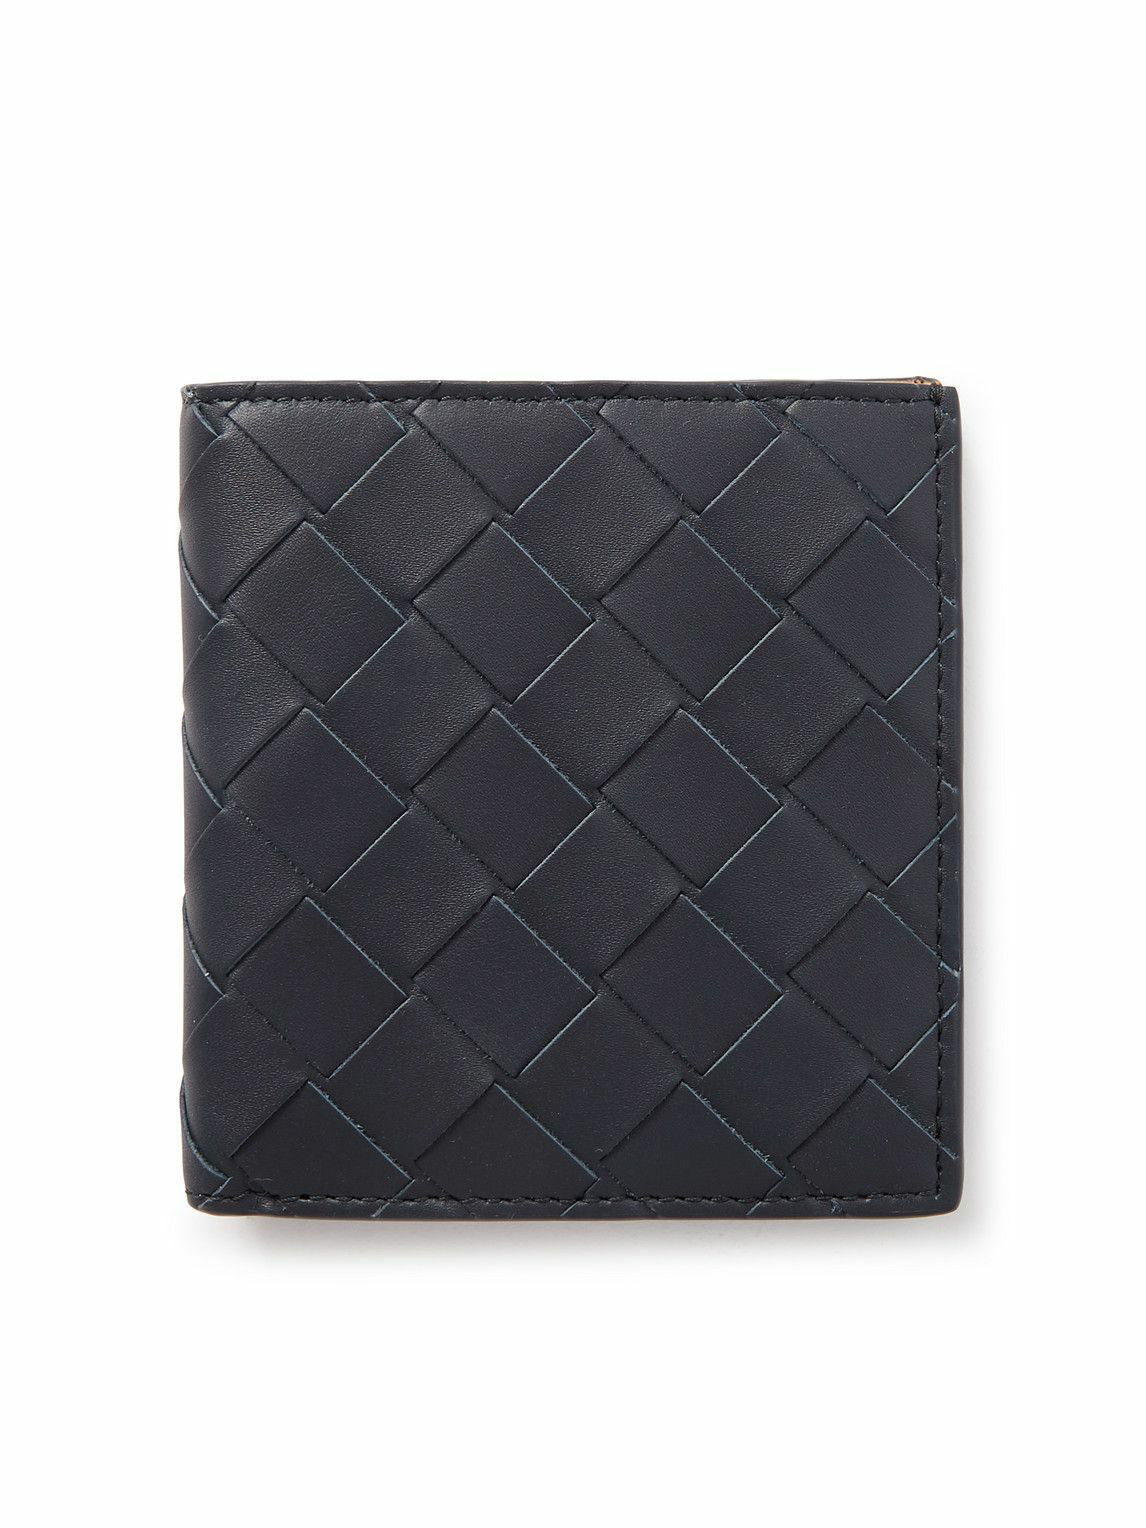 Bottega Veneta - Intrecciato Leather Billfold Wallet Bottega Veneta